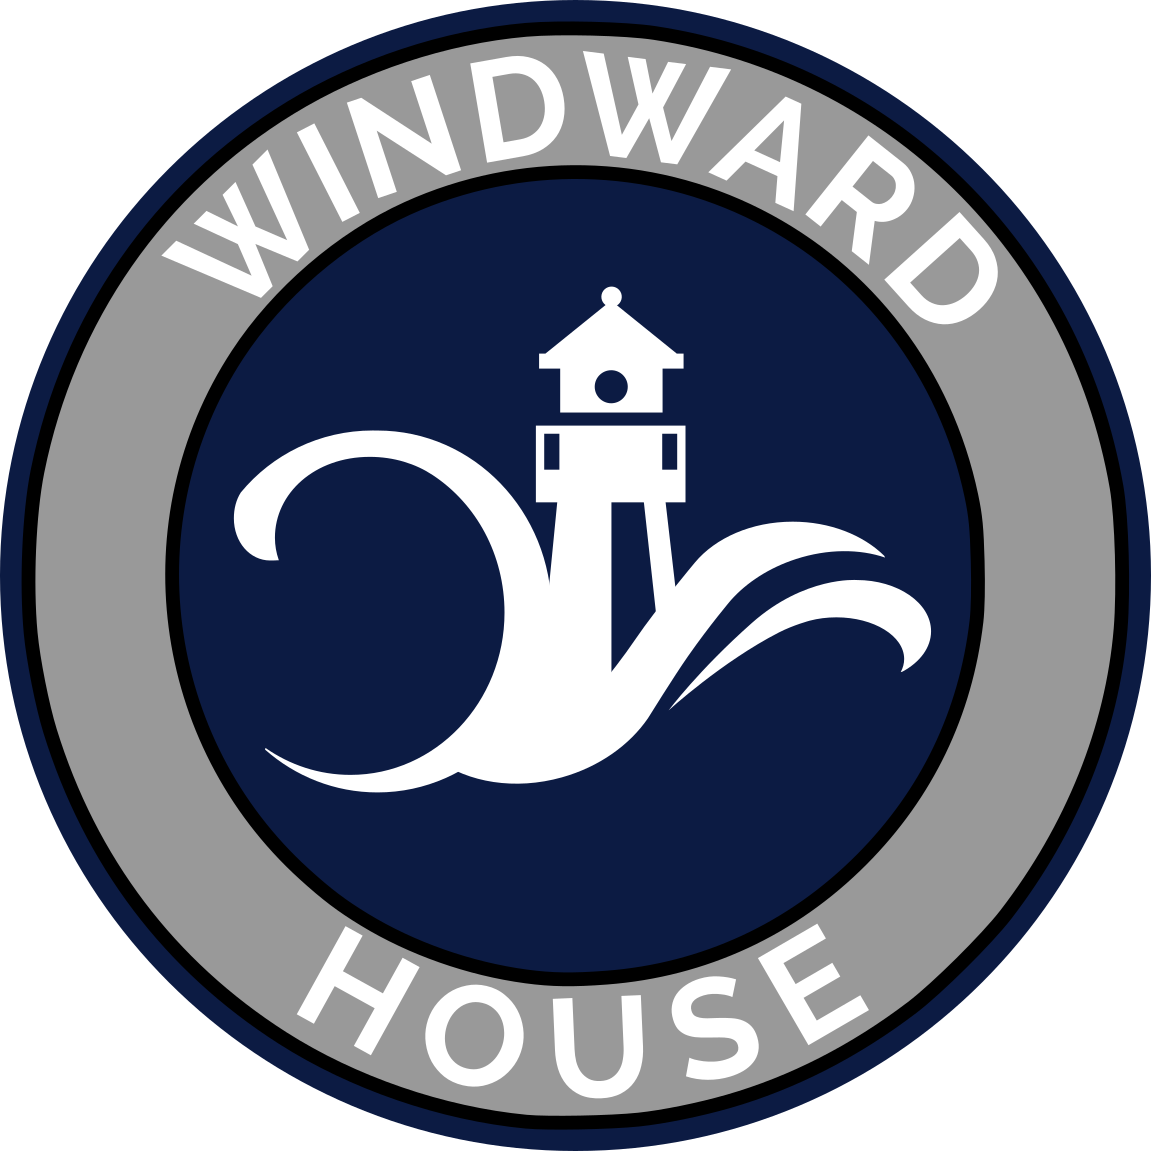 Best Location Camden Maine Bed and Breakfast | Windward House